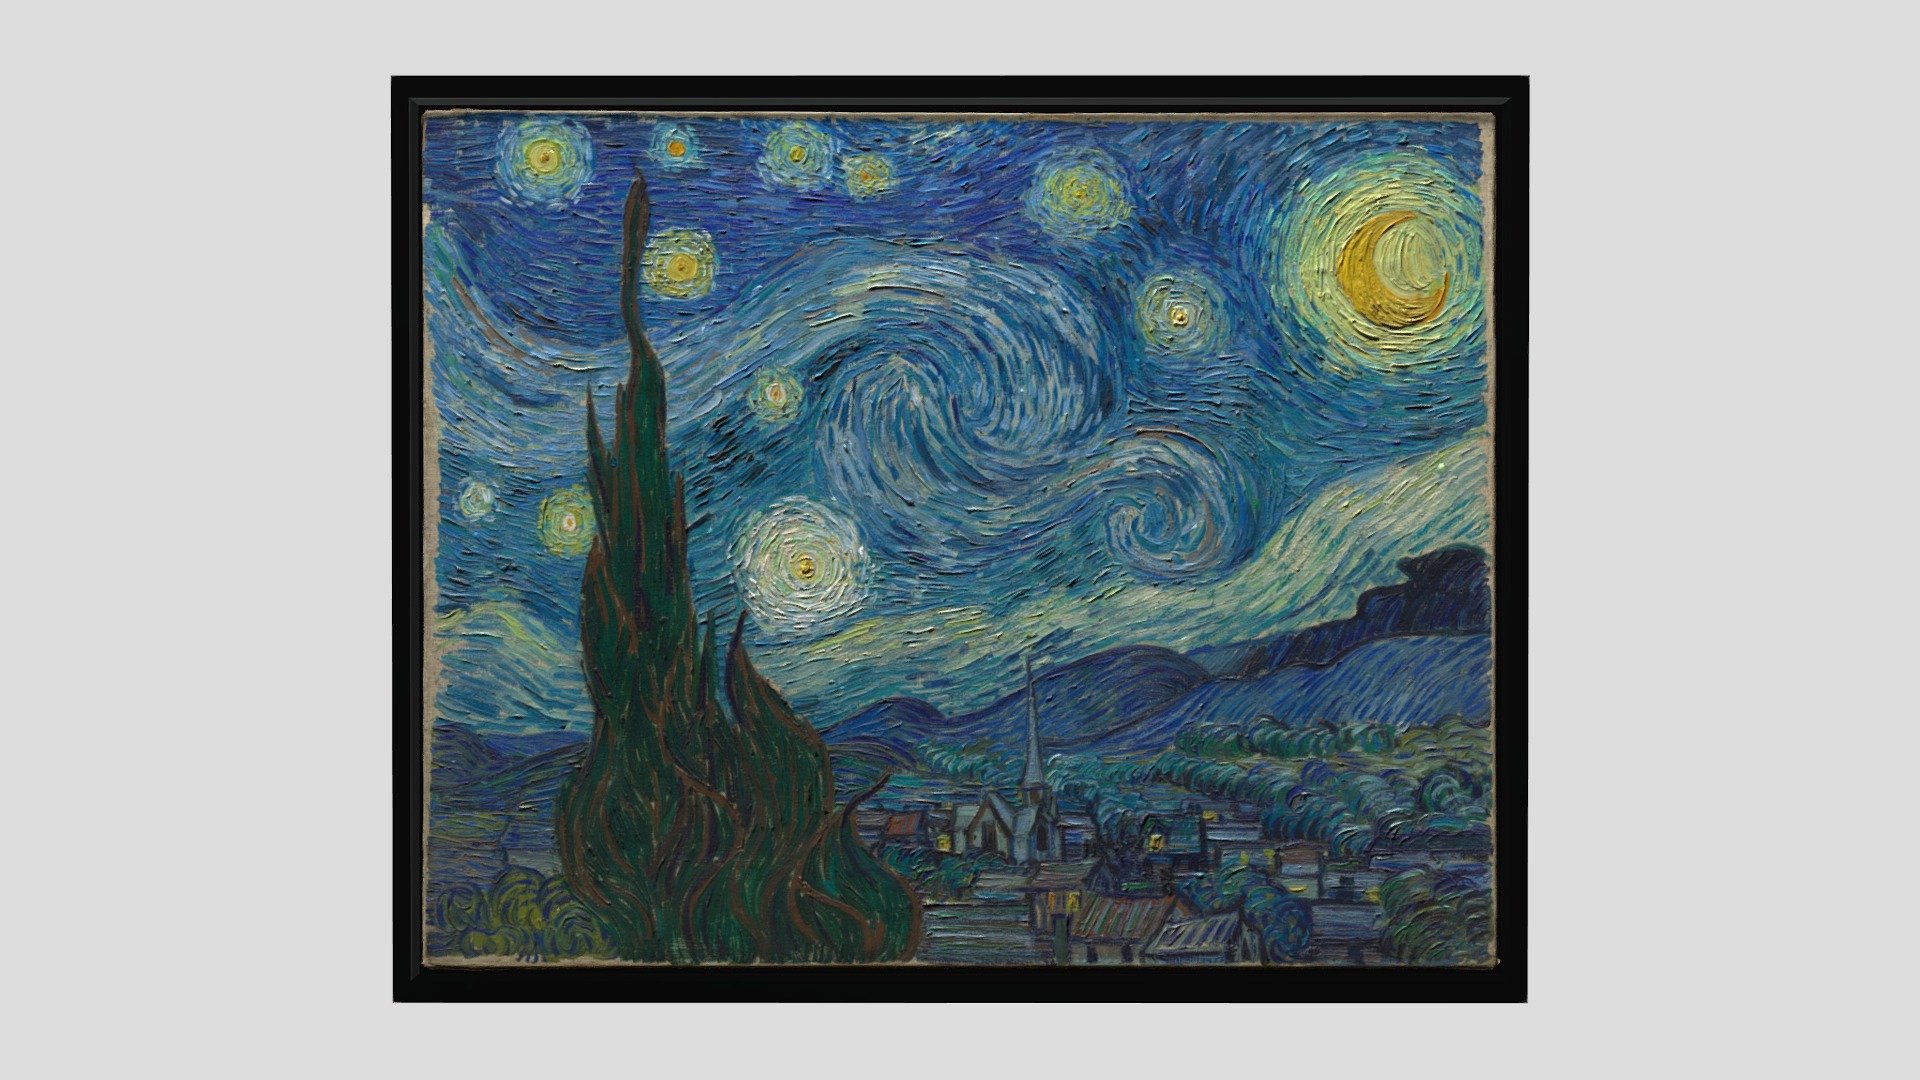 Vincent van Gogh
The Starry Night
Saint Rémy, June 1889

Oil on canvas
29 x 36 1/4